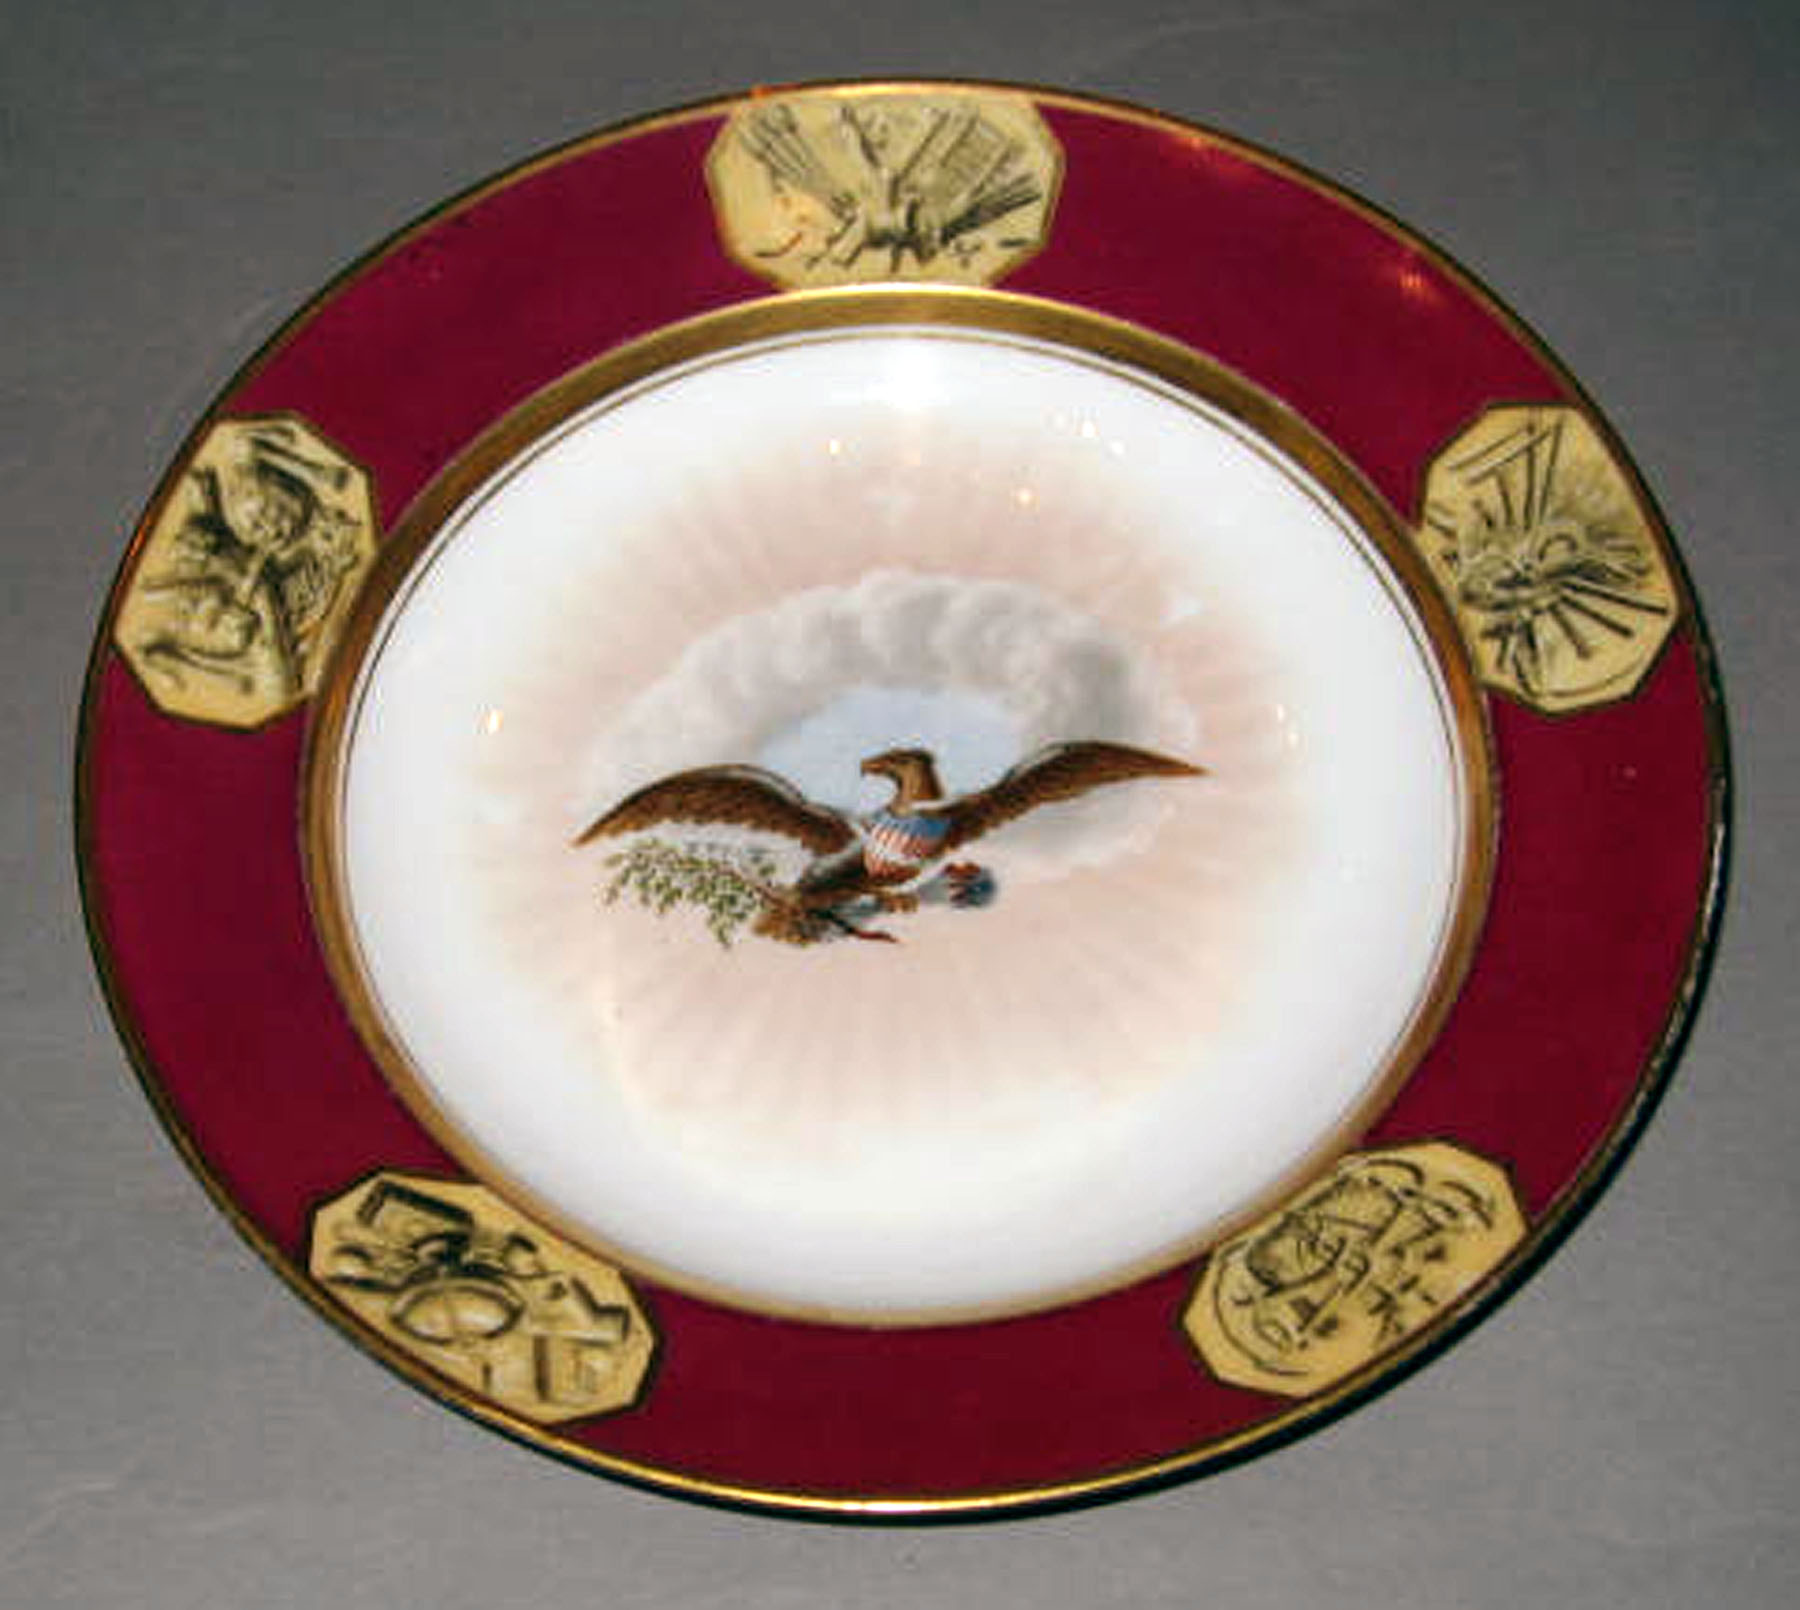 1958.1606.037 Porcelain dessert plate